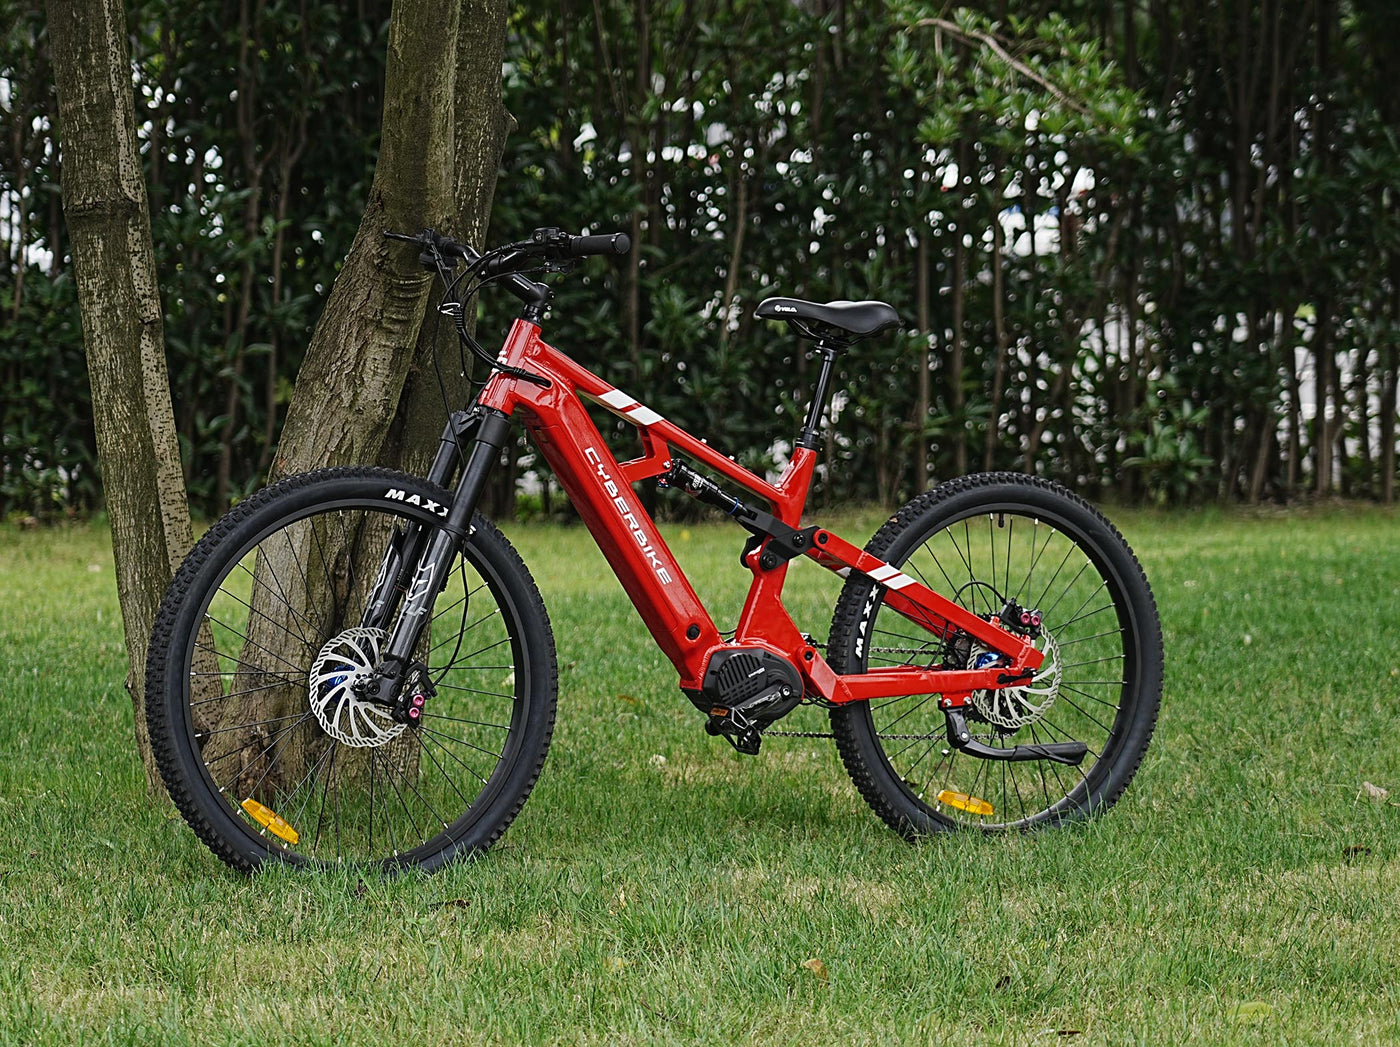 2025 Cyberbike Raptor. Mid drive electric mountain bike